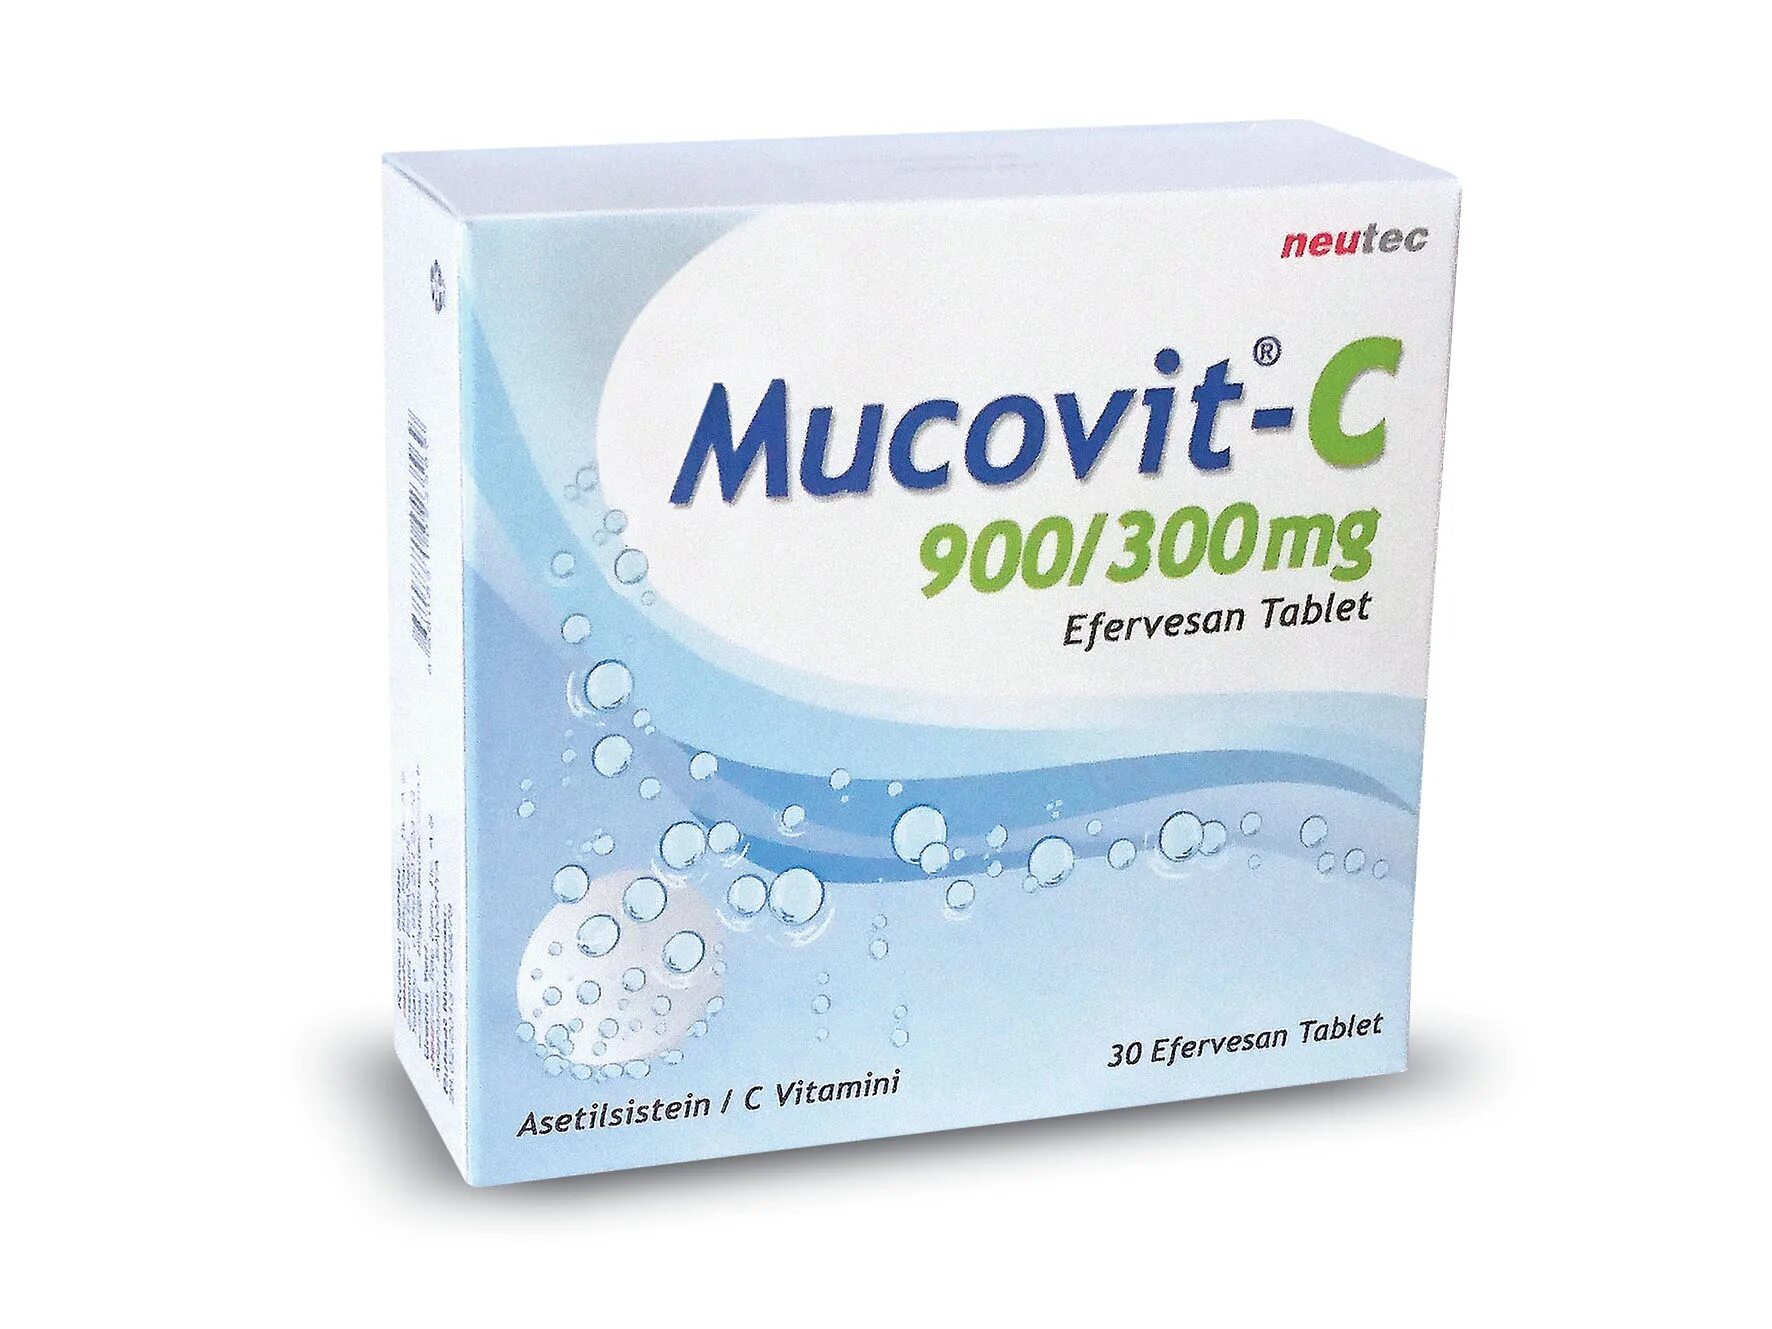 Mucovit-c 600/200 MG Efervesan Tablet. Турецкое лекарство Mucovit-c Efervesan Tablet. Mucovit-c 600/200 MG Efervesan Tablet (30 Efervesan Tablet). Турецкая лекарство NAC 600mg Efervesan Tablet.